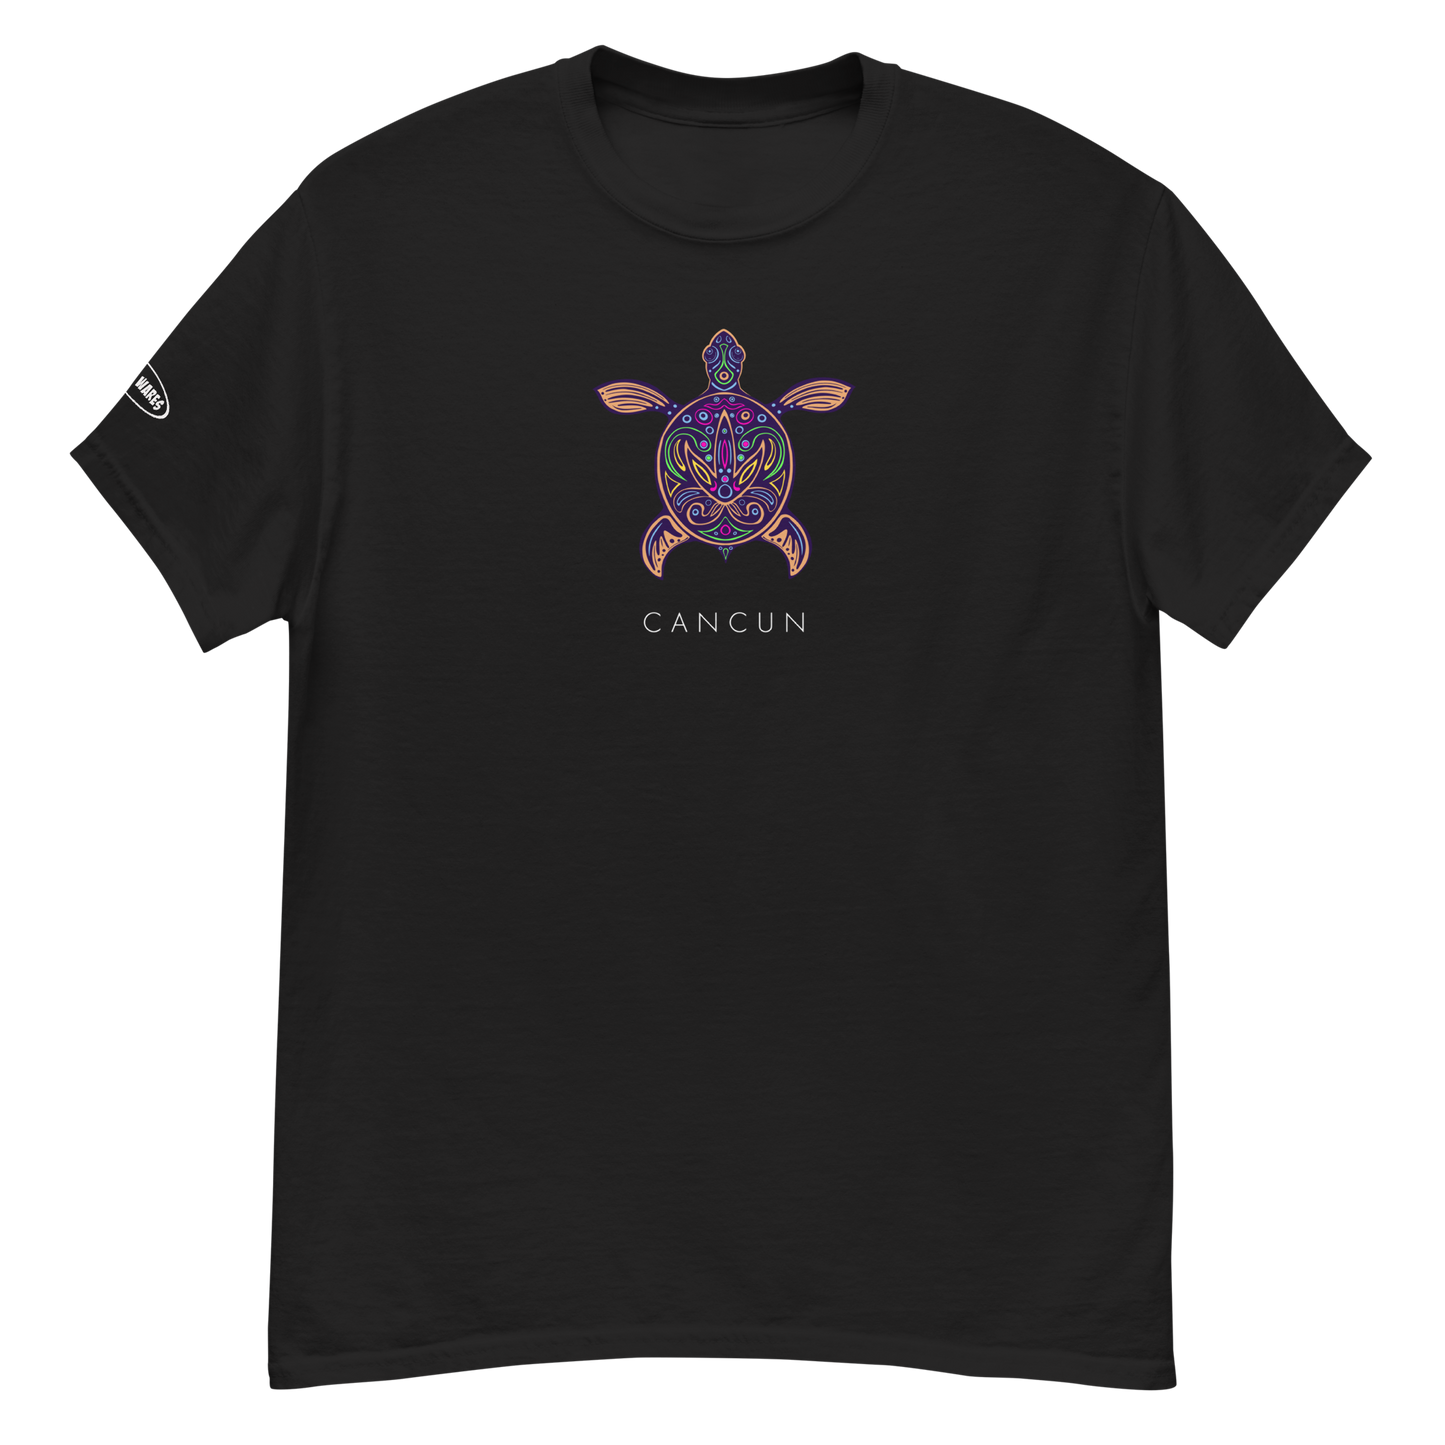 Unisex - CANCUN - Tribal Vibrant Turtle T-Shirt